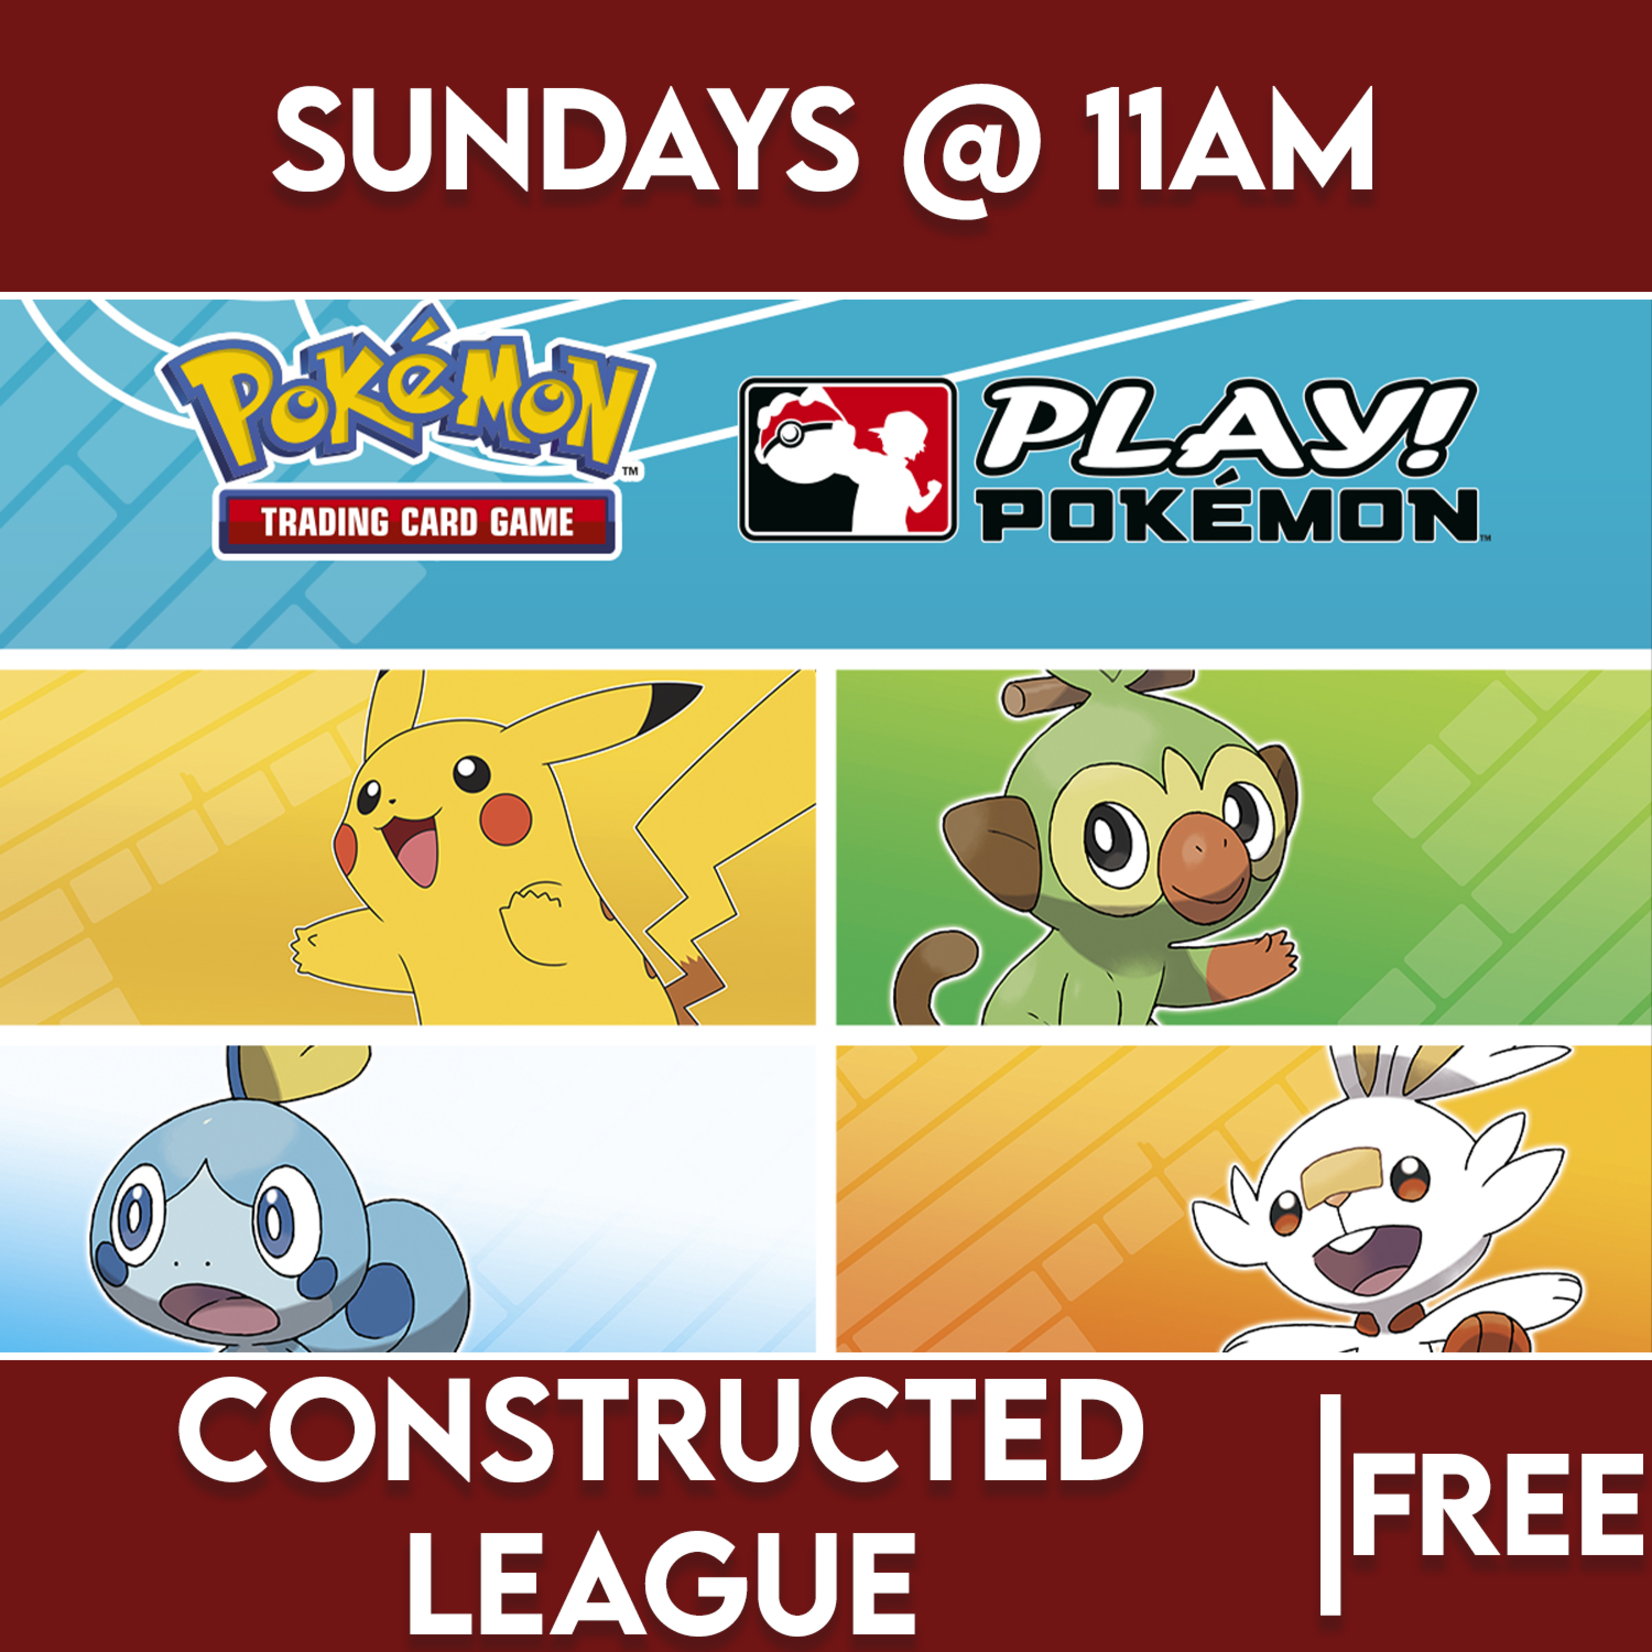 Pokémon 04/07 Sunday @ 11 AM - Pokémon League